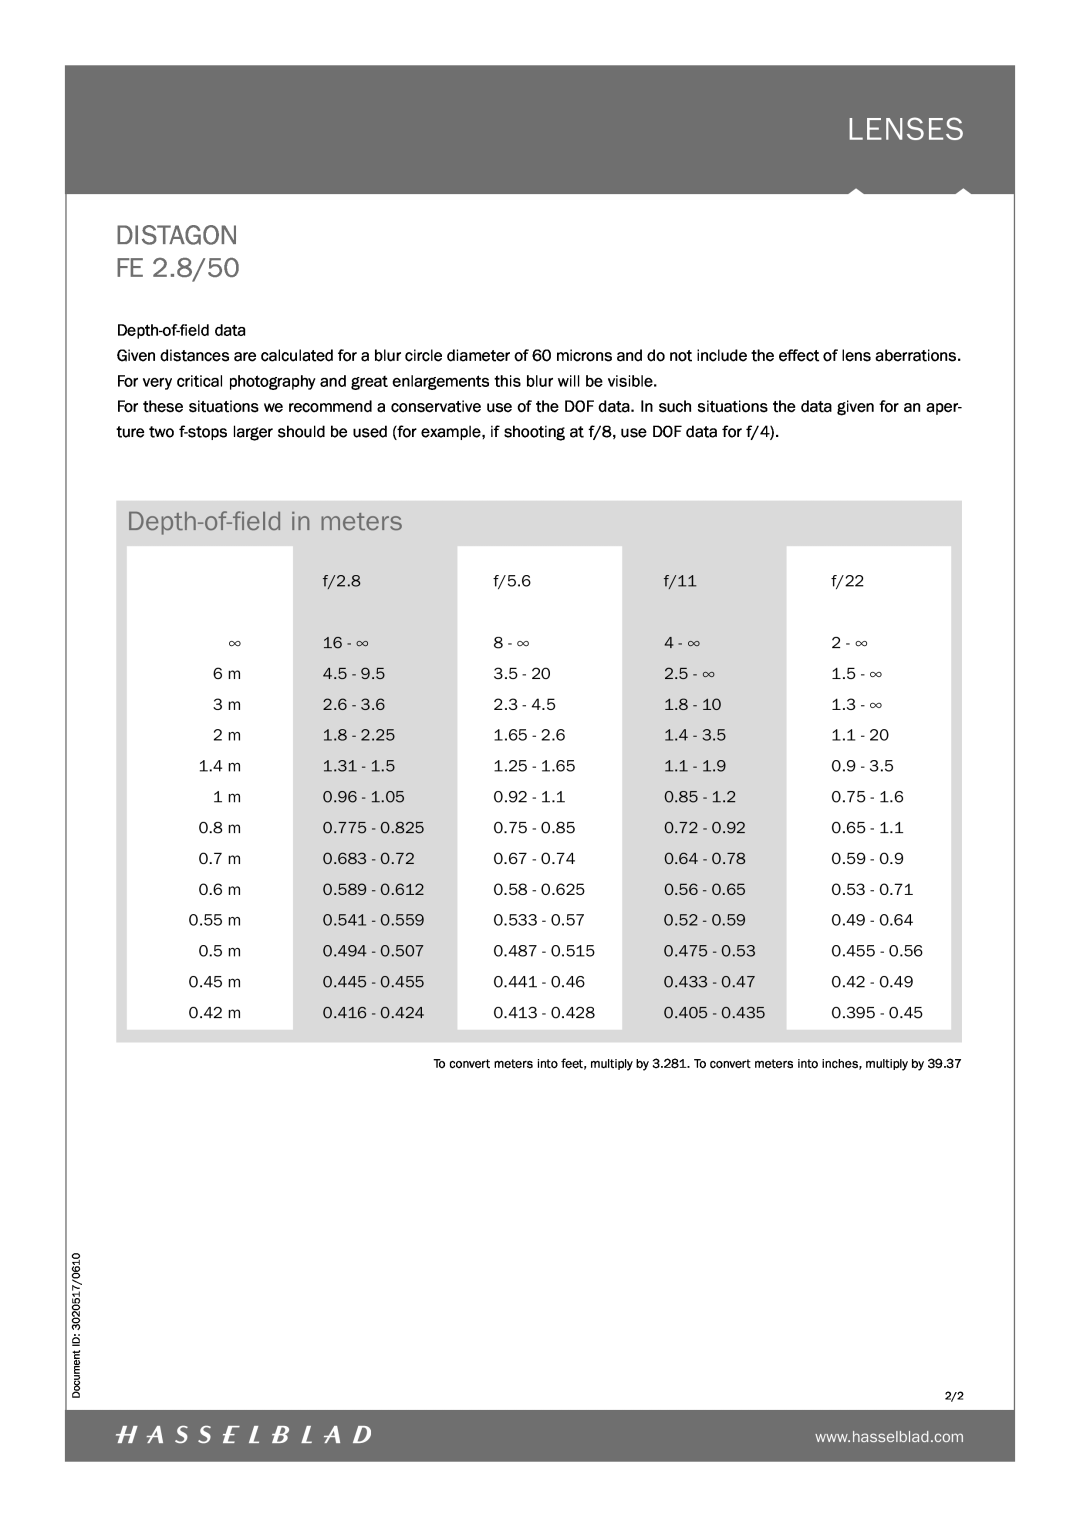 Hasselblad manual Depth-of-ﬁeld in meters, Lenses, DISTAGON FE 2.8/50 